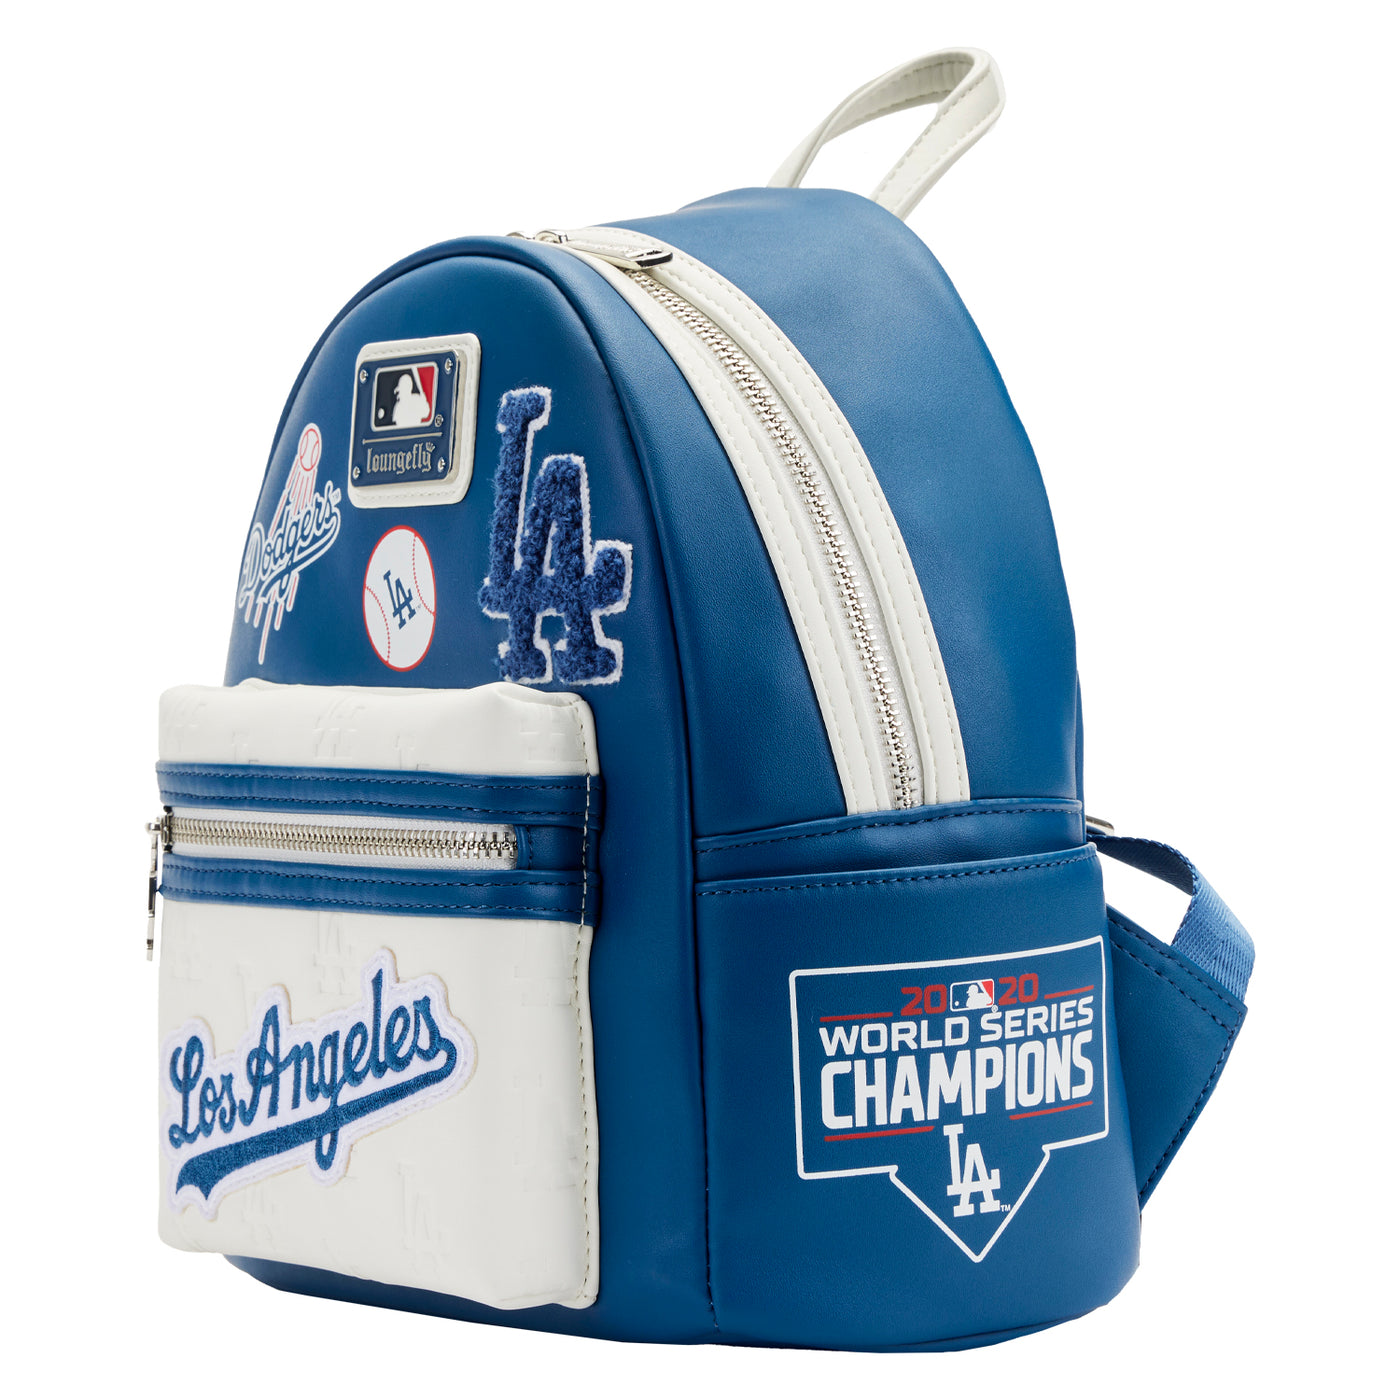 Herschel x MLB Los Angeles Dodgers Heritage Backpack - Blue - New Star